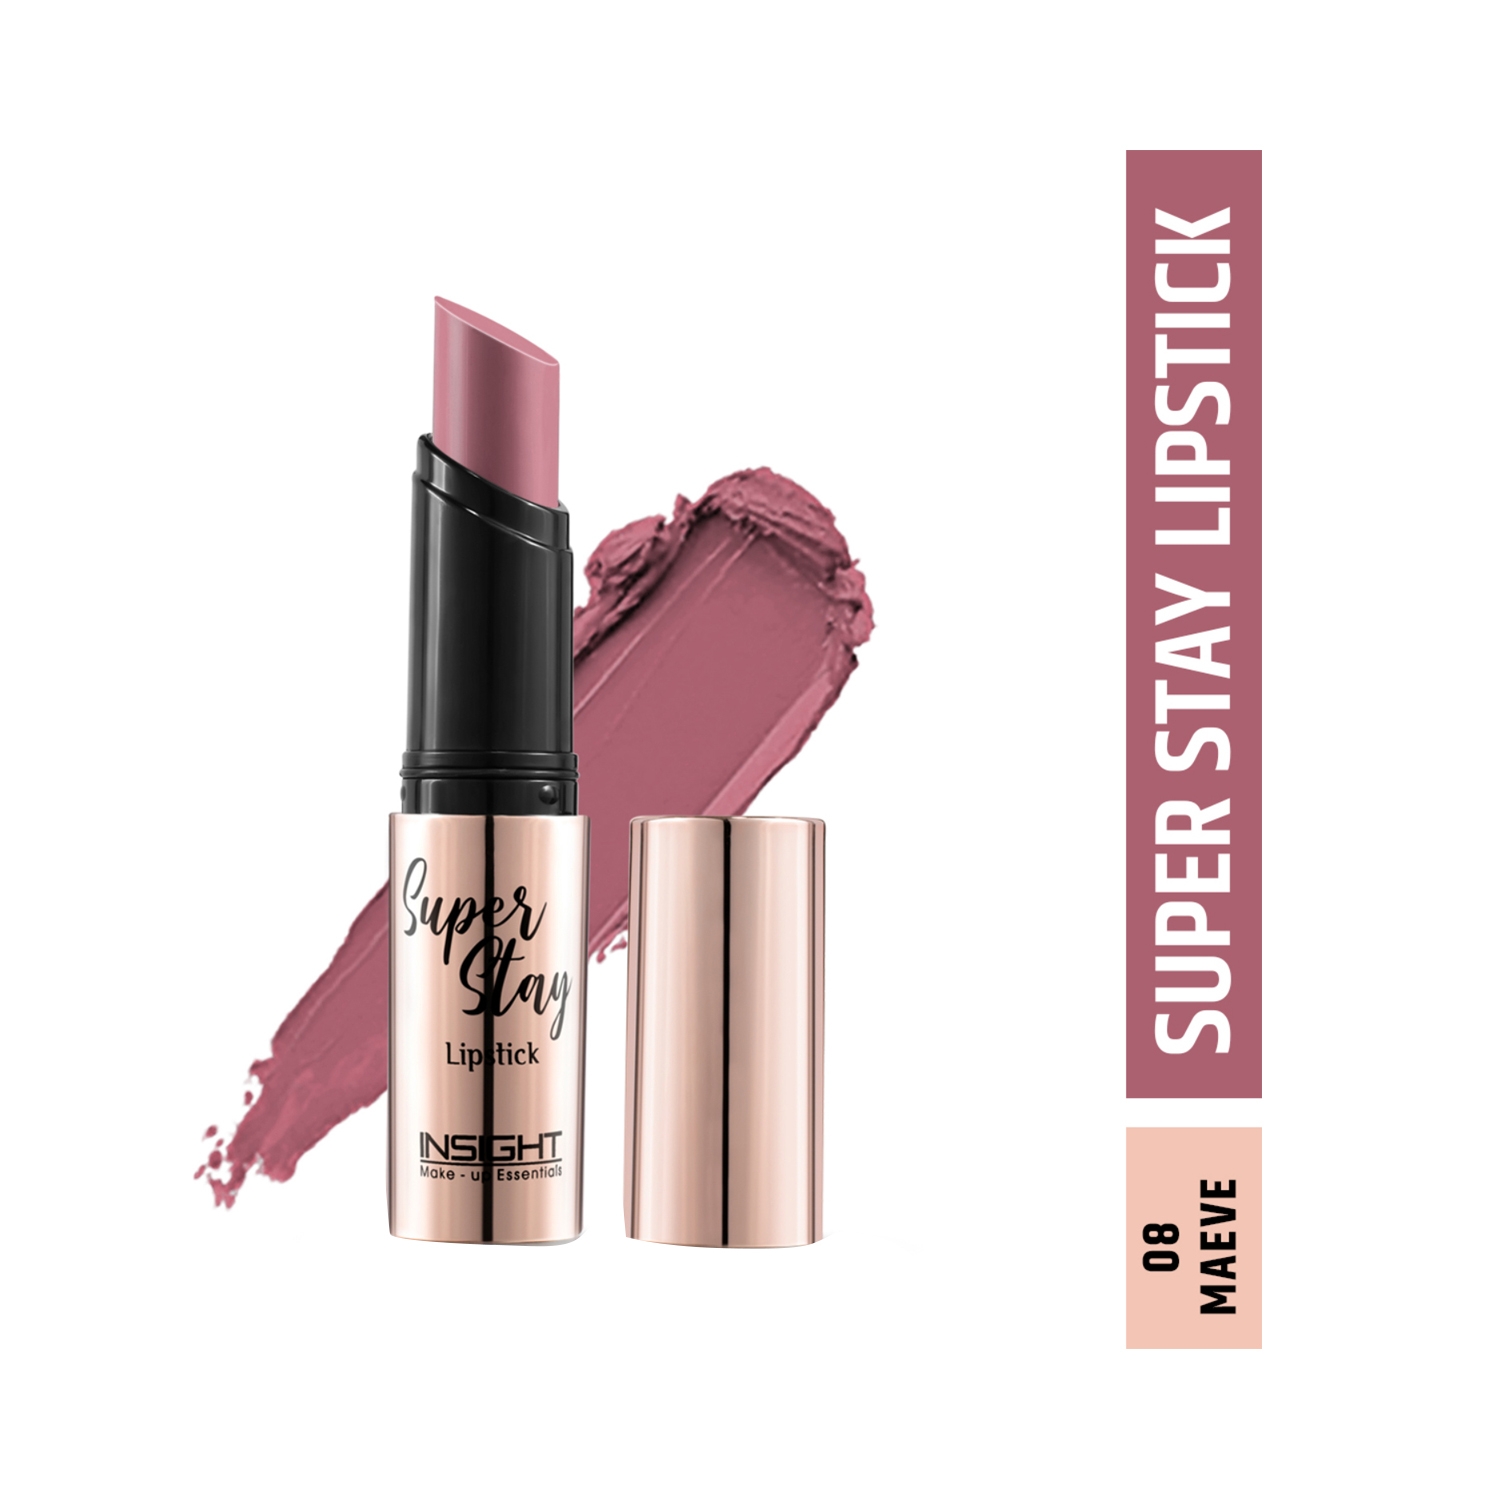 Insight Cosmetics | Insight Cosmetics Super Stay Lipstick - 08 Maeve (7g)